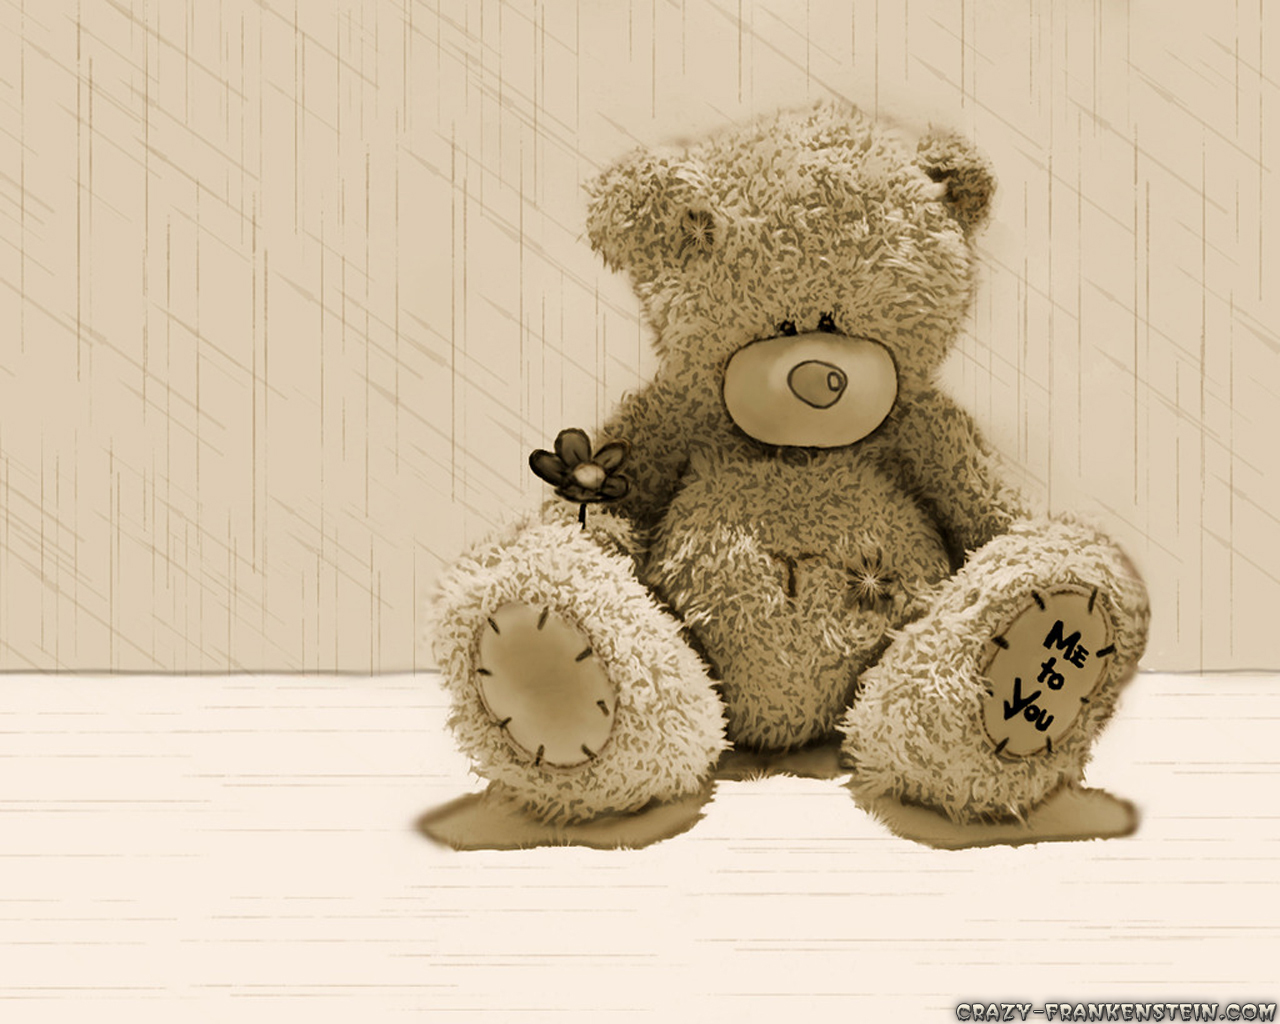 Teddy bear wallpaper